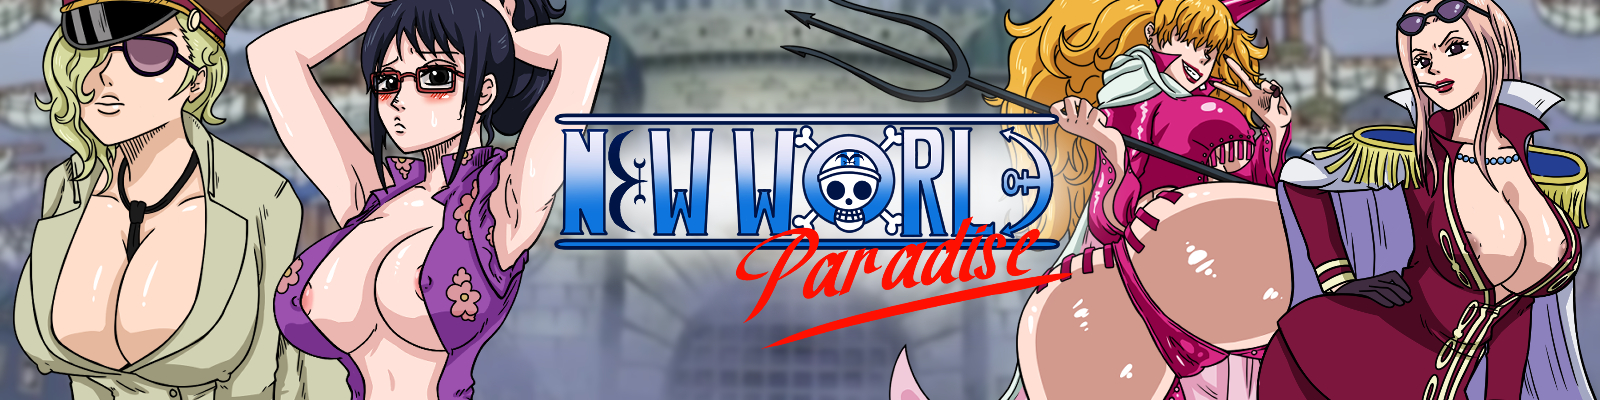 New World Paradise poster